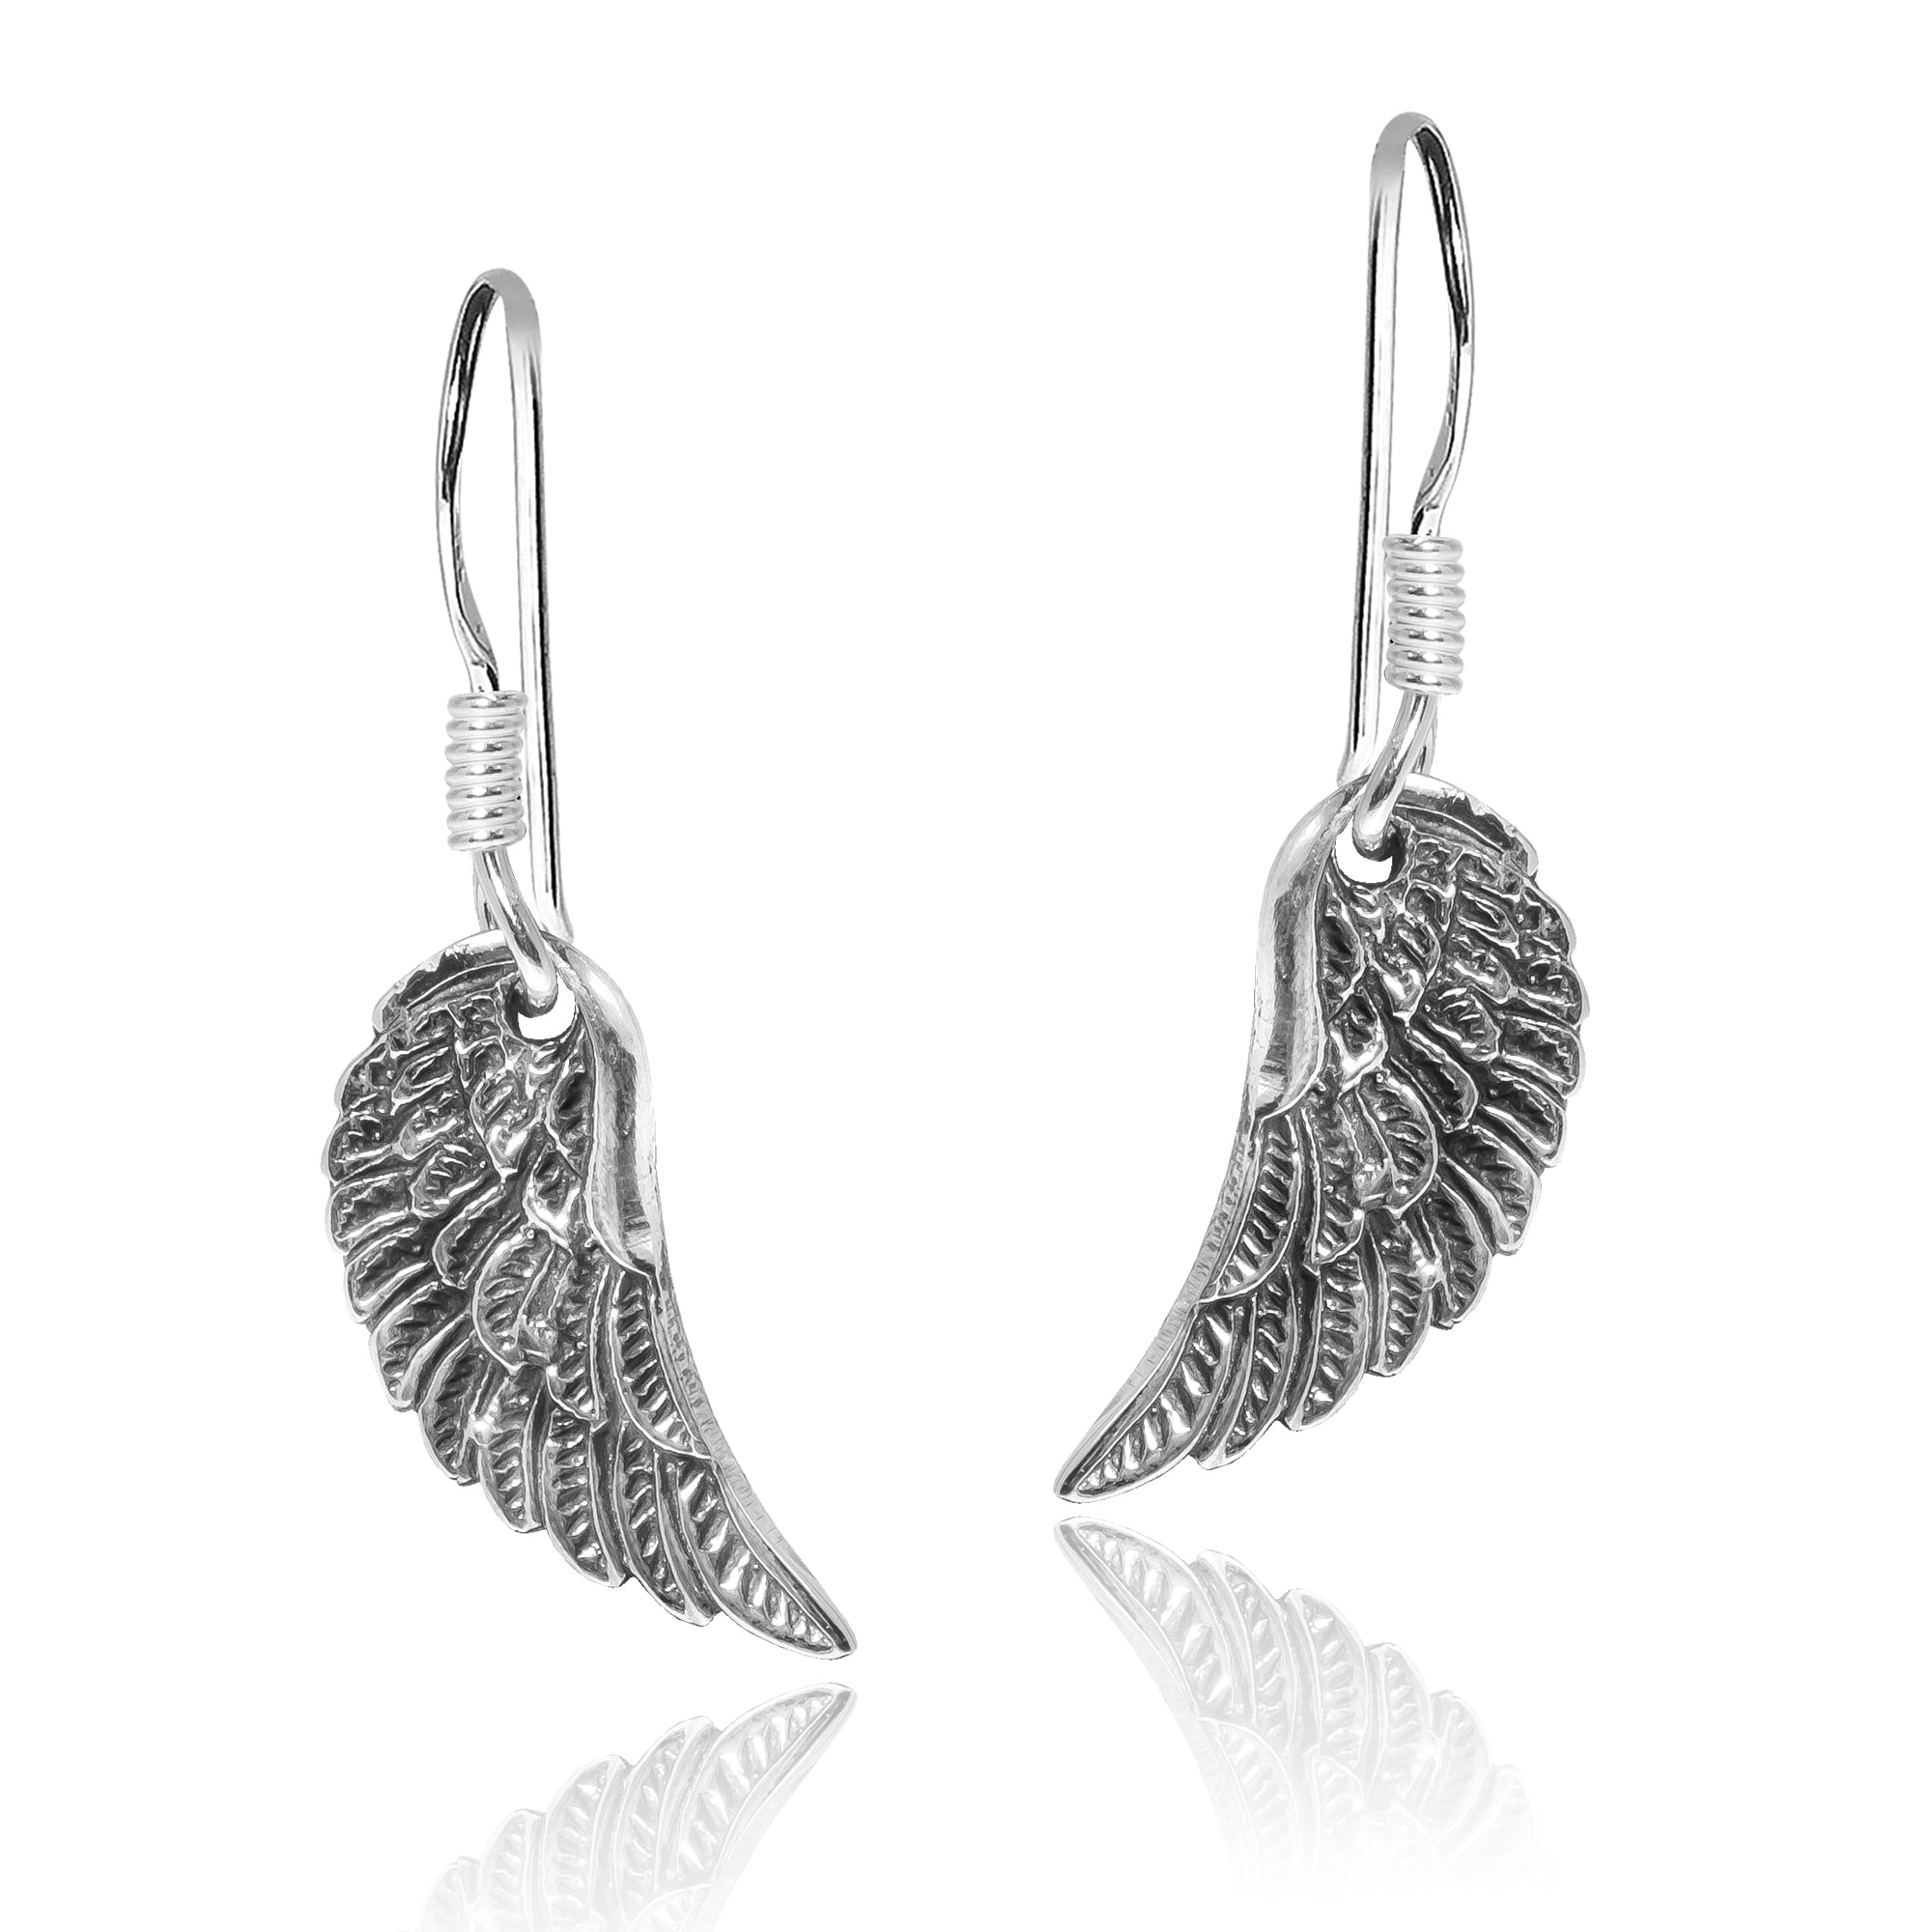 DOUBLE Sided SUBLIMATION Blanks ANGEL Wings Earrings in Memory